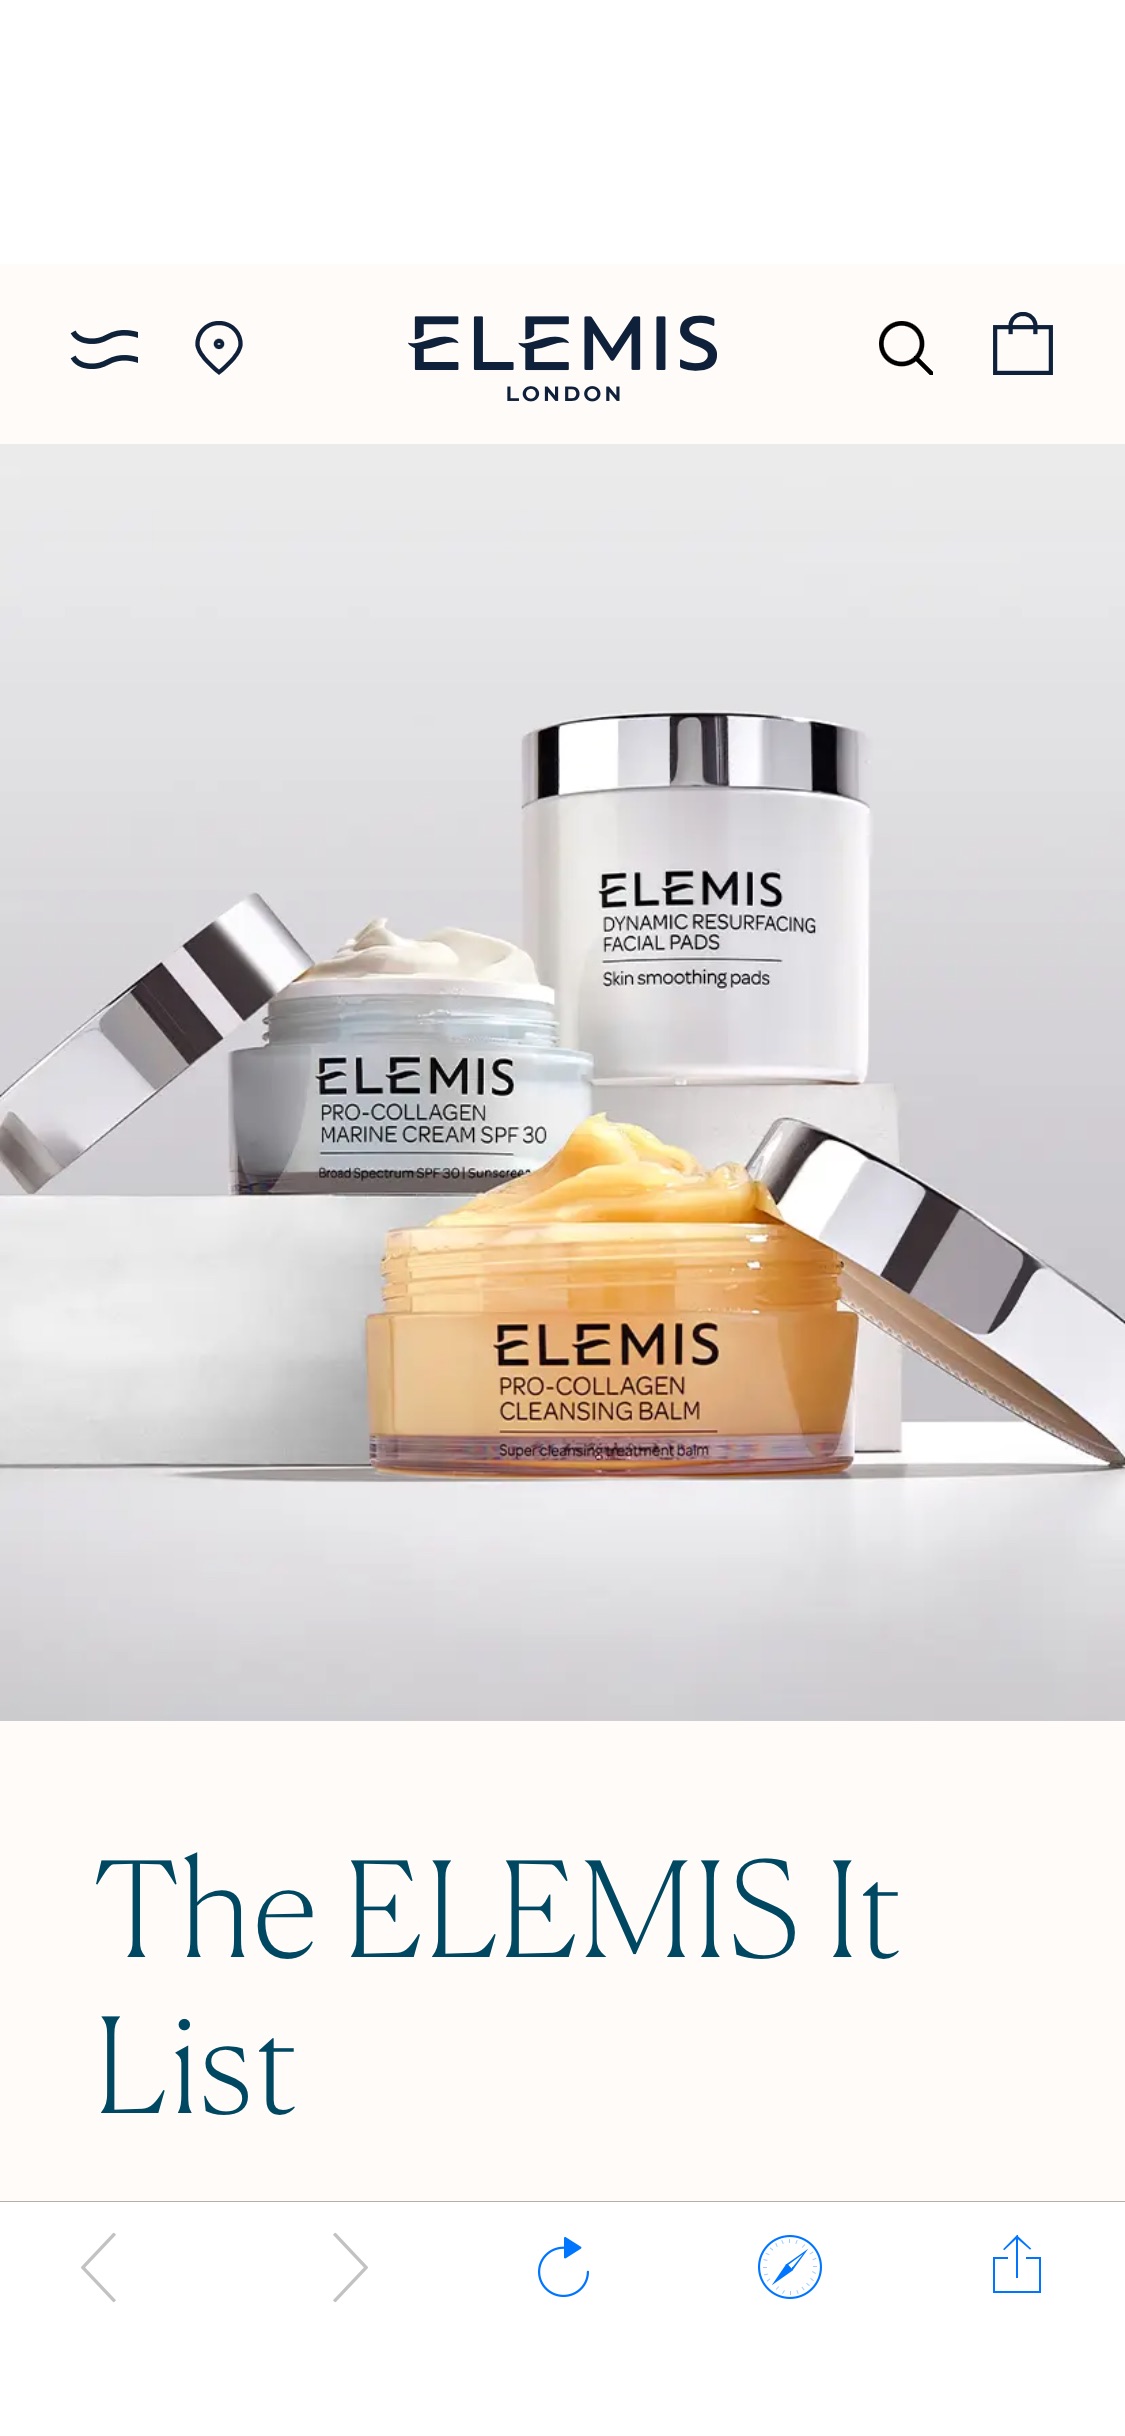 ELEMIS US | Luxury Skincare and Body Care | Official Site
购物满$175送价值$143的明星6件套